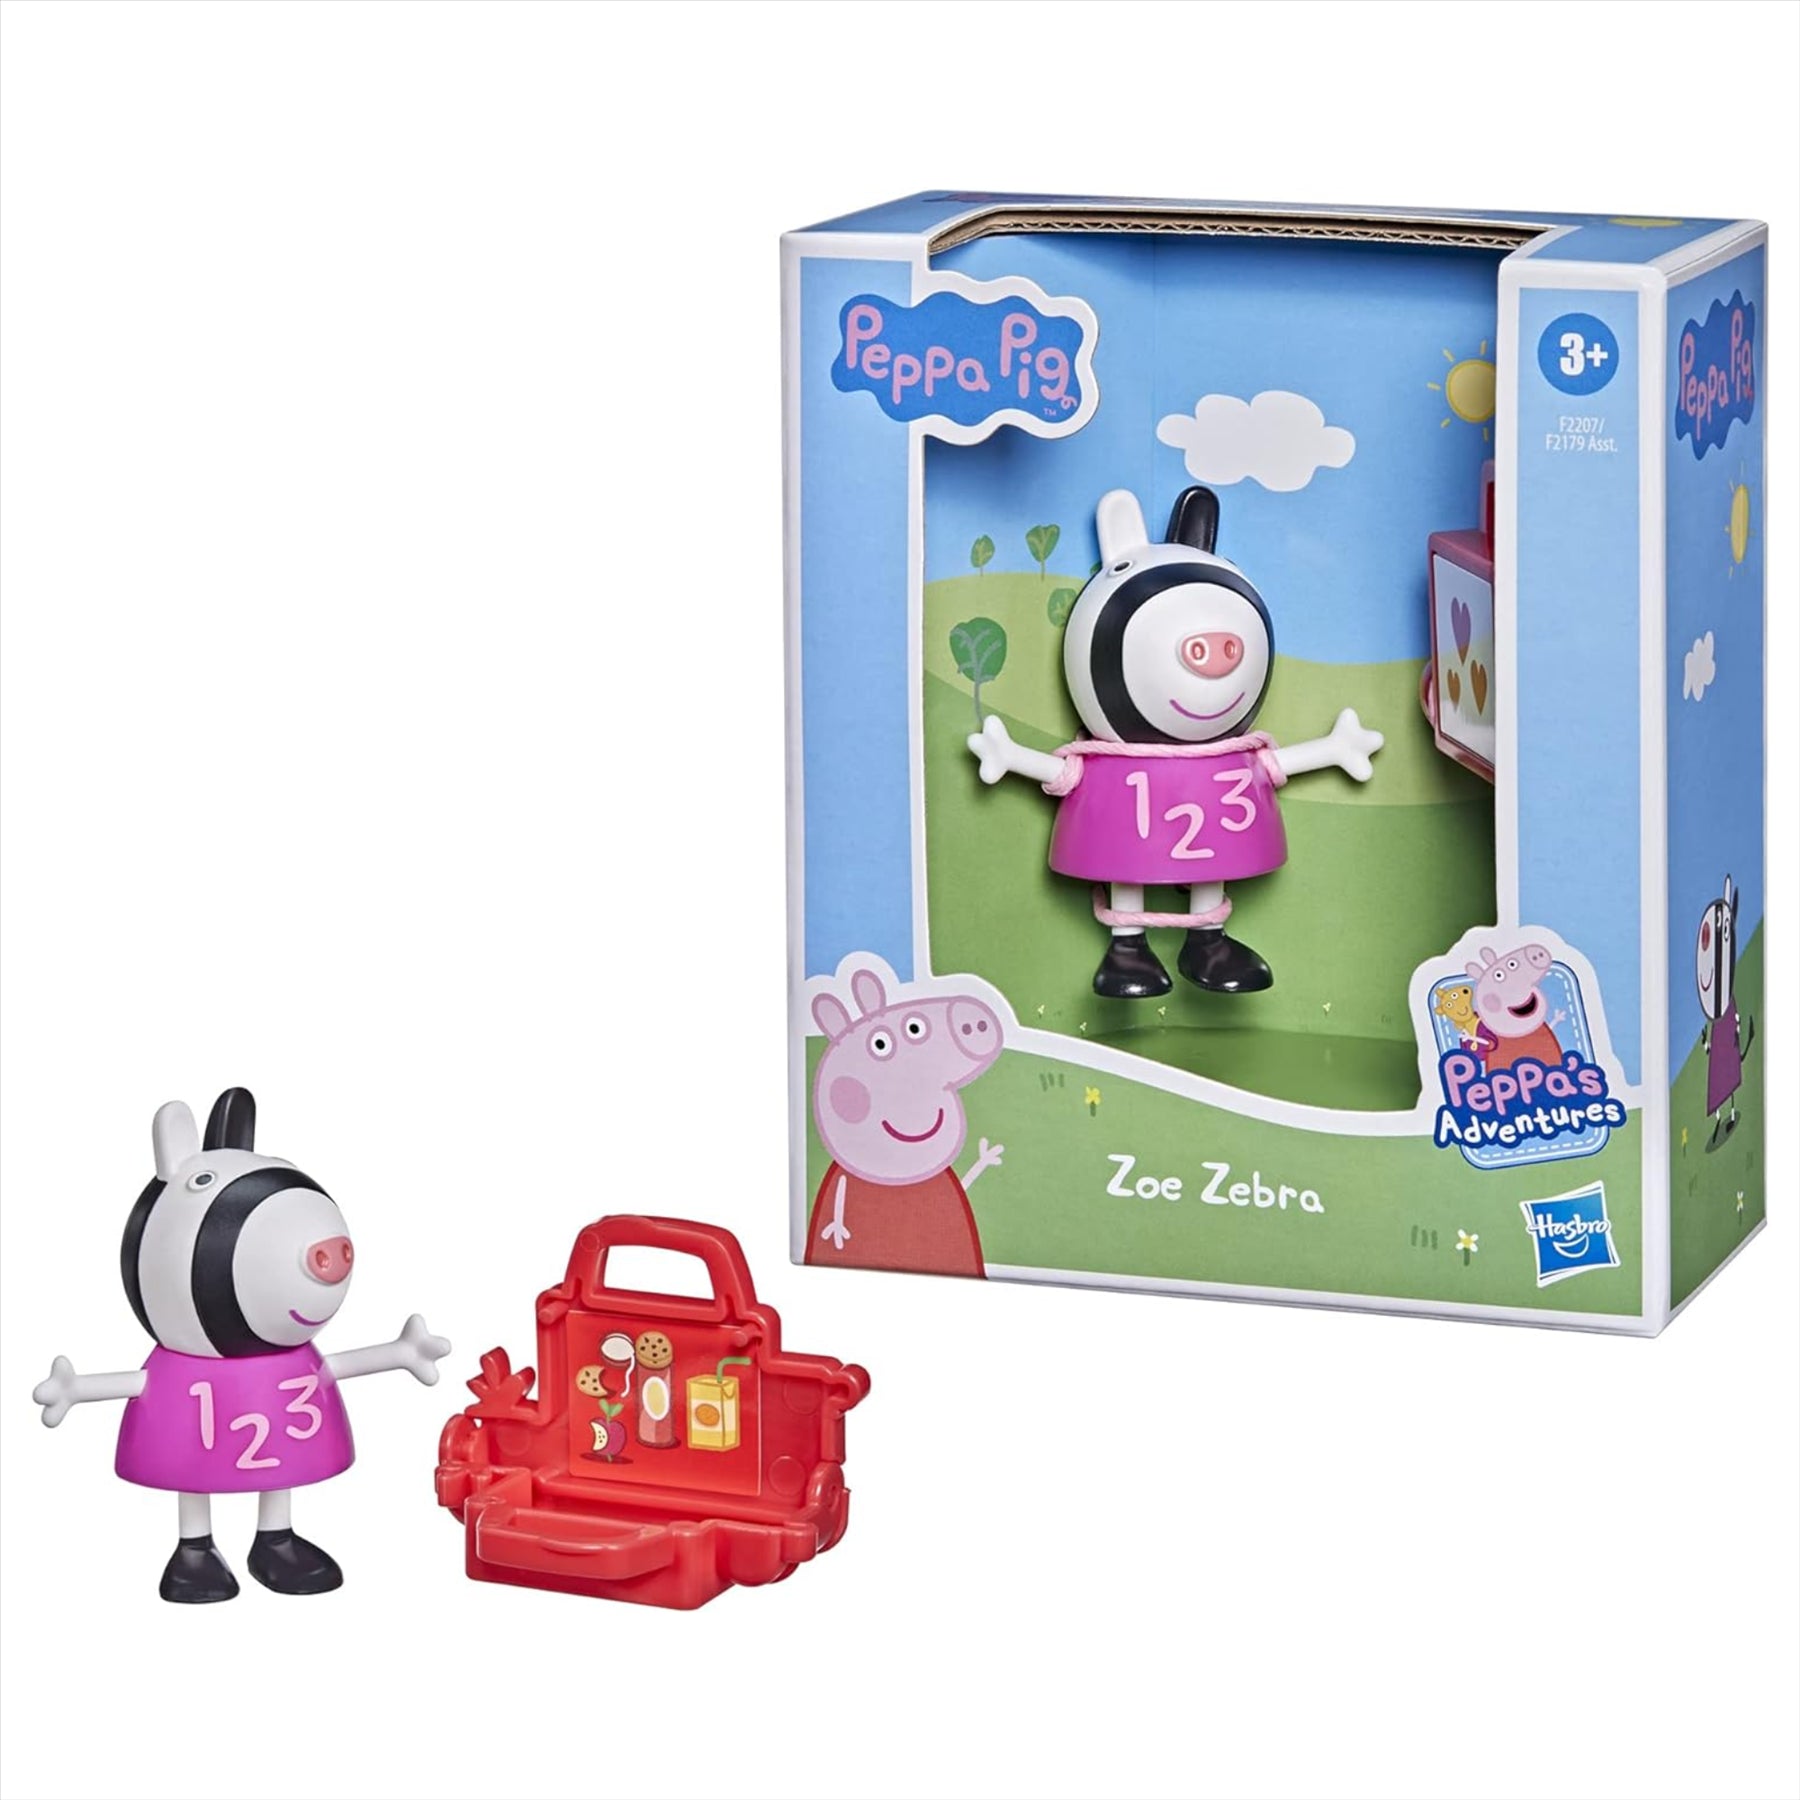 Peppa Pig - Peppa's Adventures Zoe Zebra Figure With Lunchbox - Toptoys2u